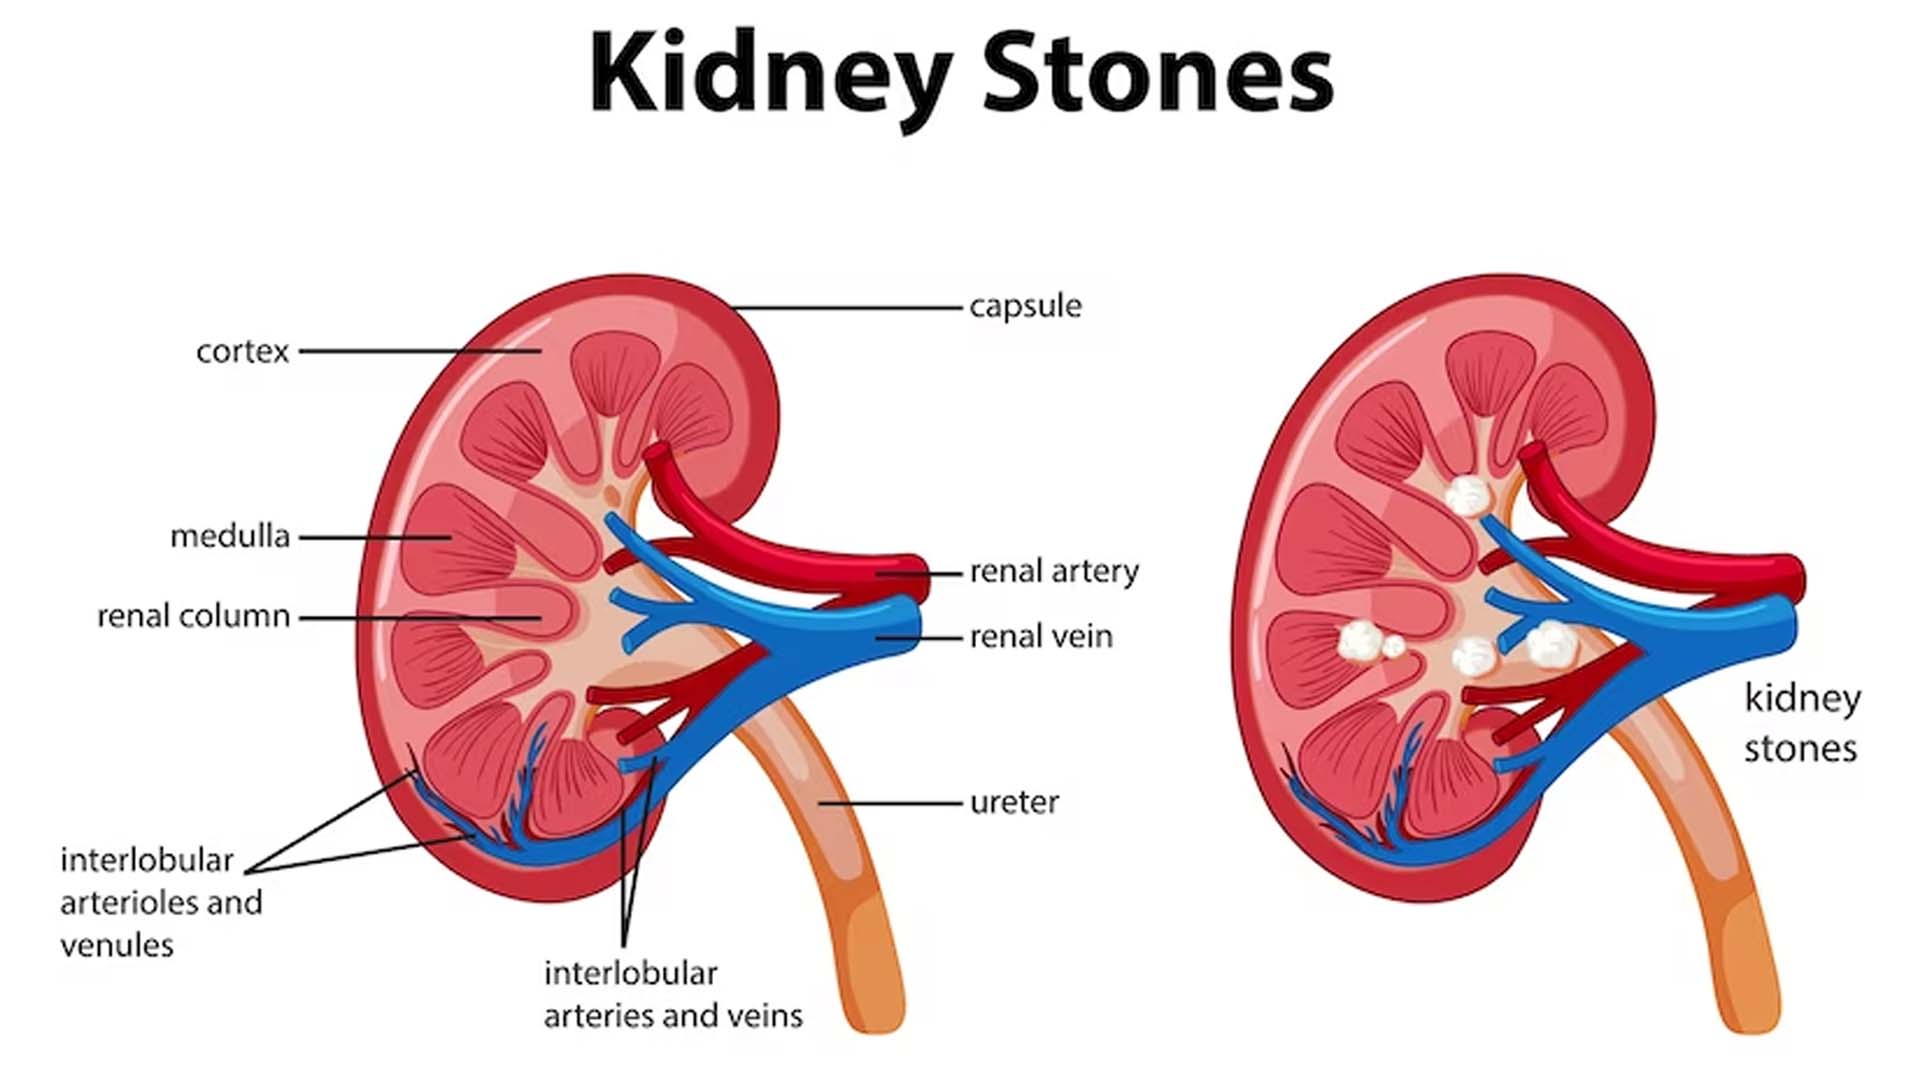 Kidney Stones anatomy